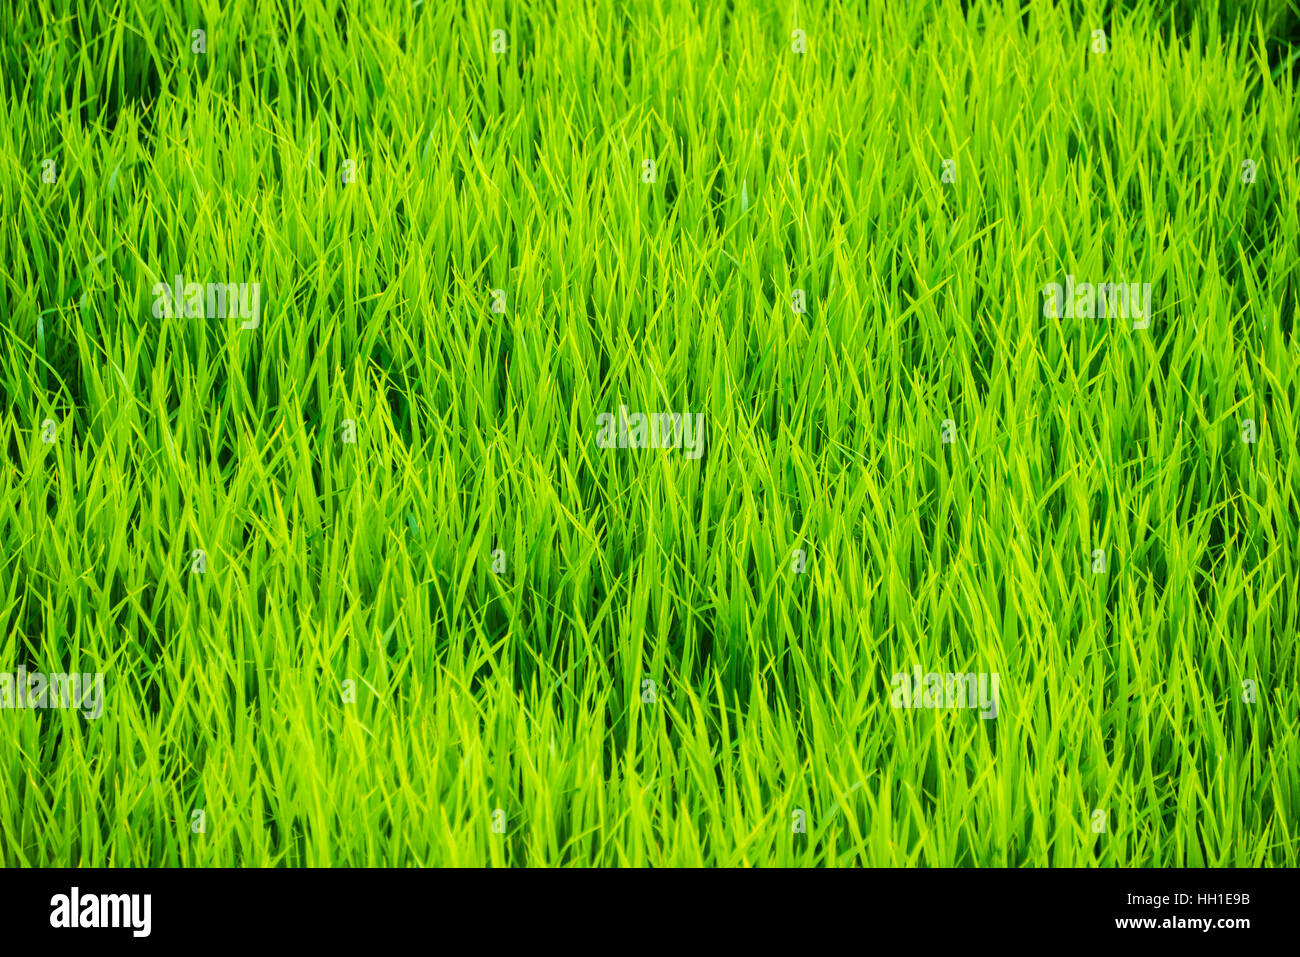 Rice (Oryza sp.) plants, green paddy field, rice cultivation, Vietnam Stock Photo